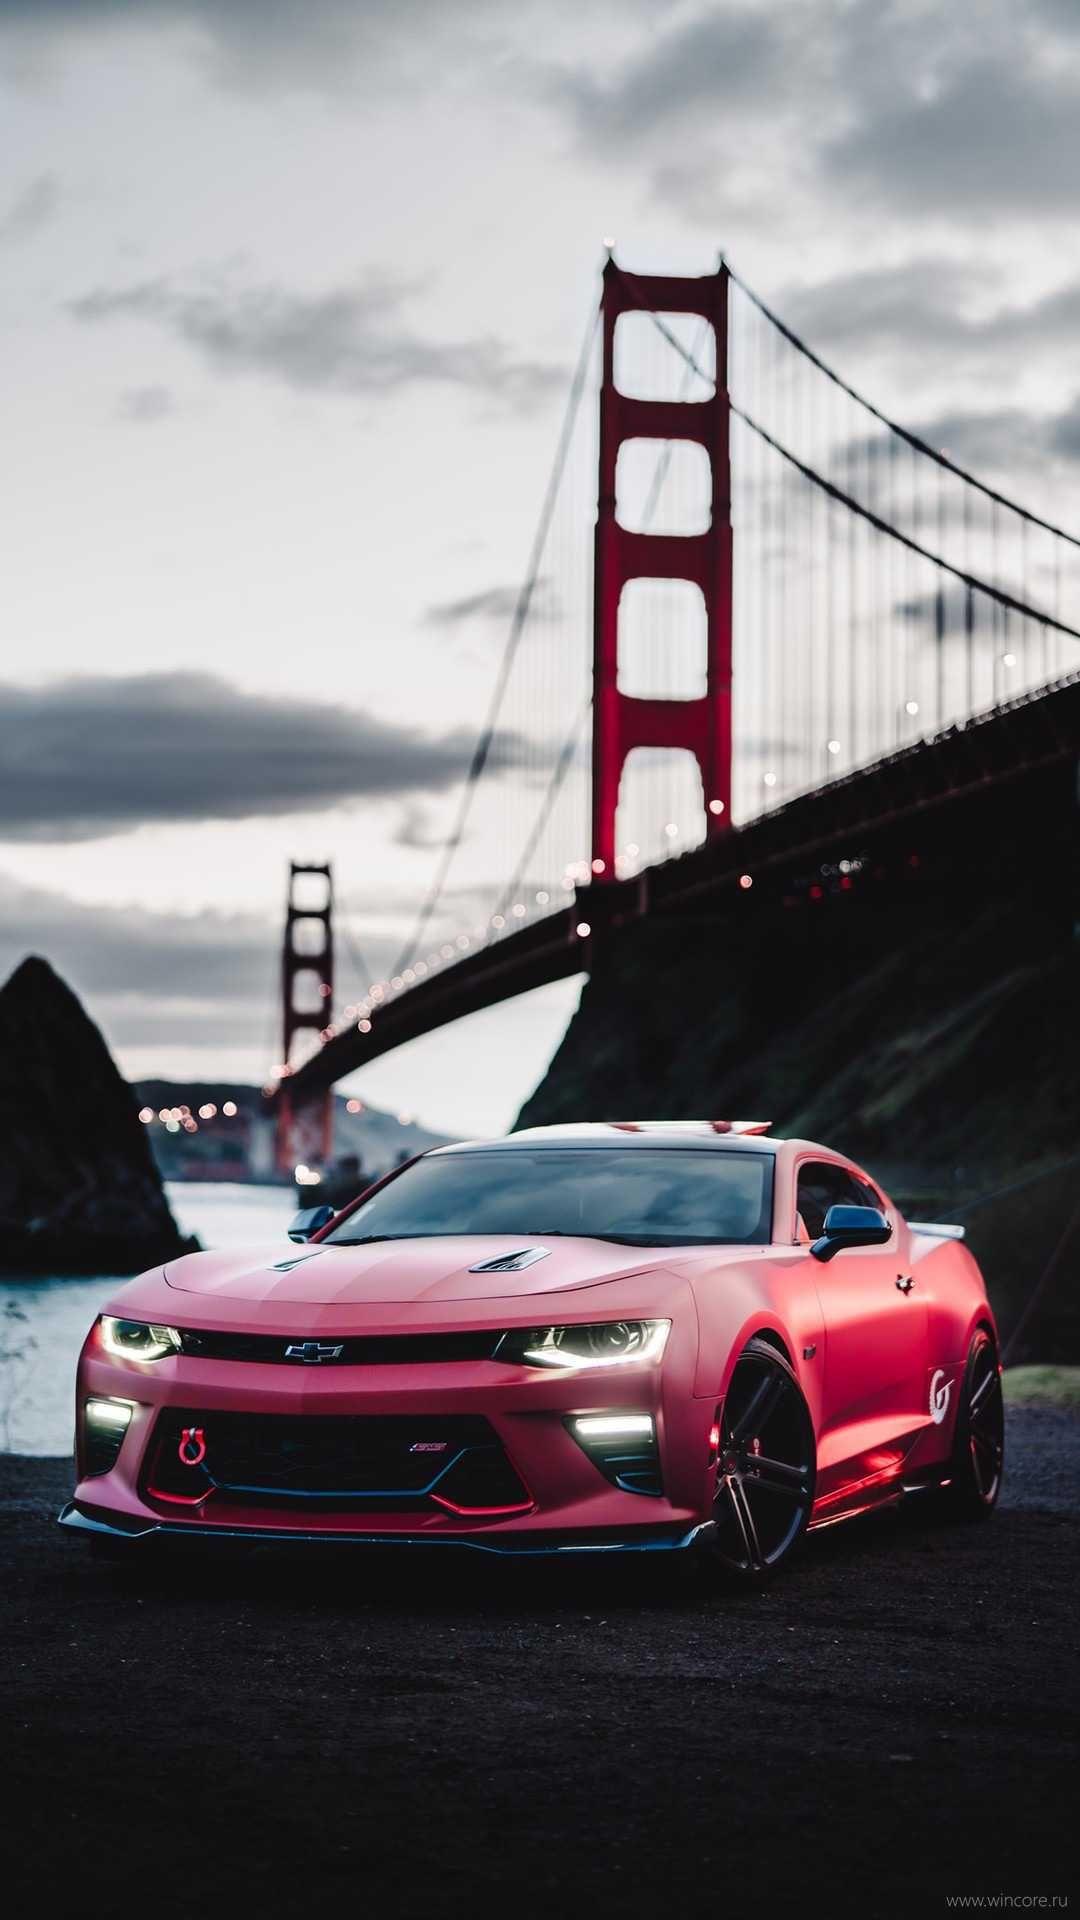 Chevrolet Camaro Golden Gate Bridge iPhone Wallpaper. Fondos de